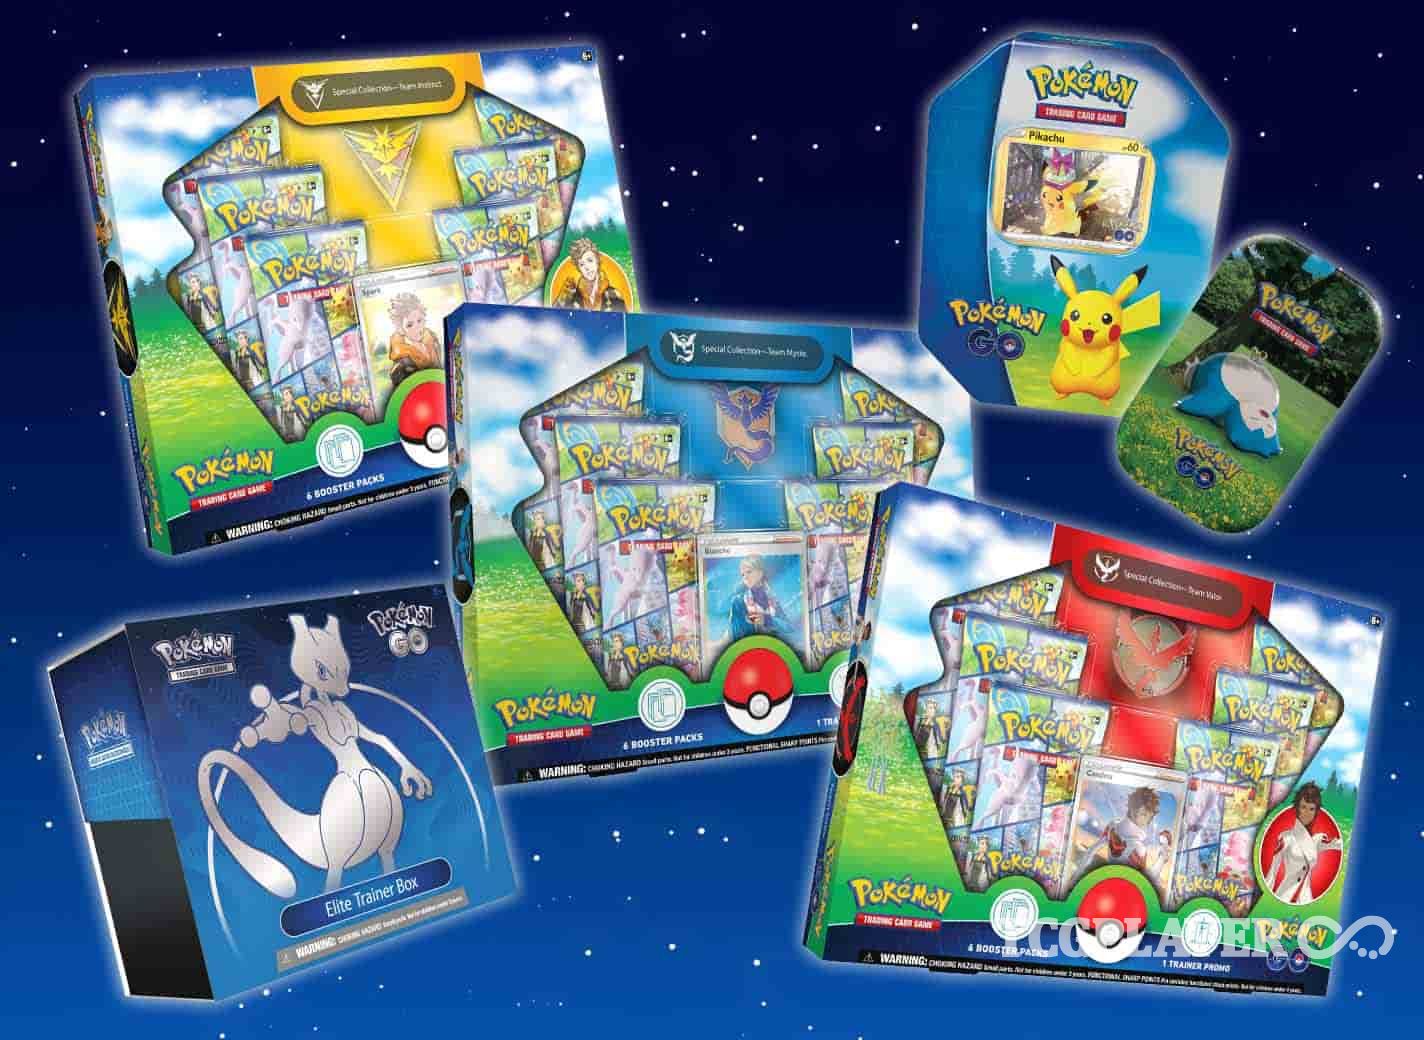 Pokémon newest set: The newest Pokémon sets and boosters